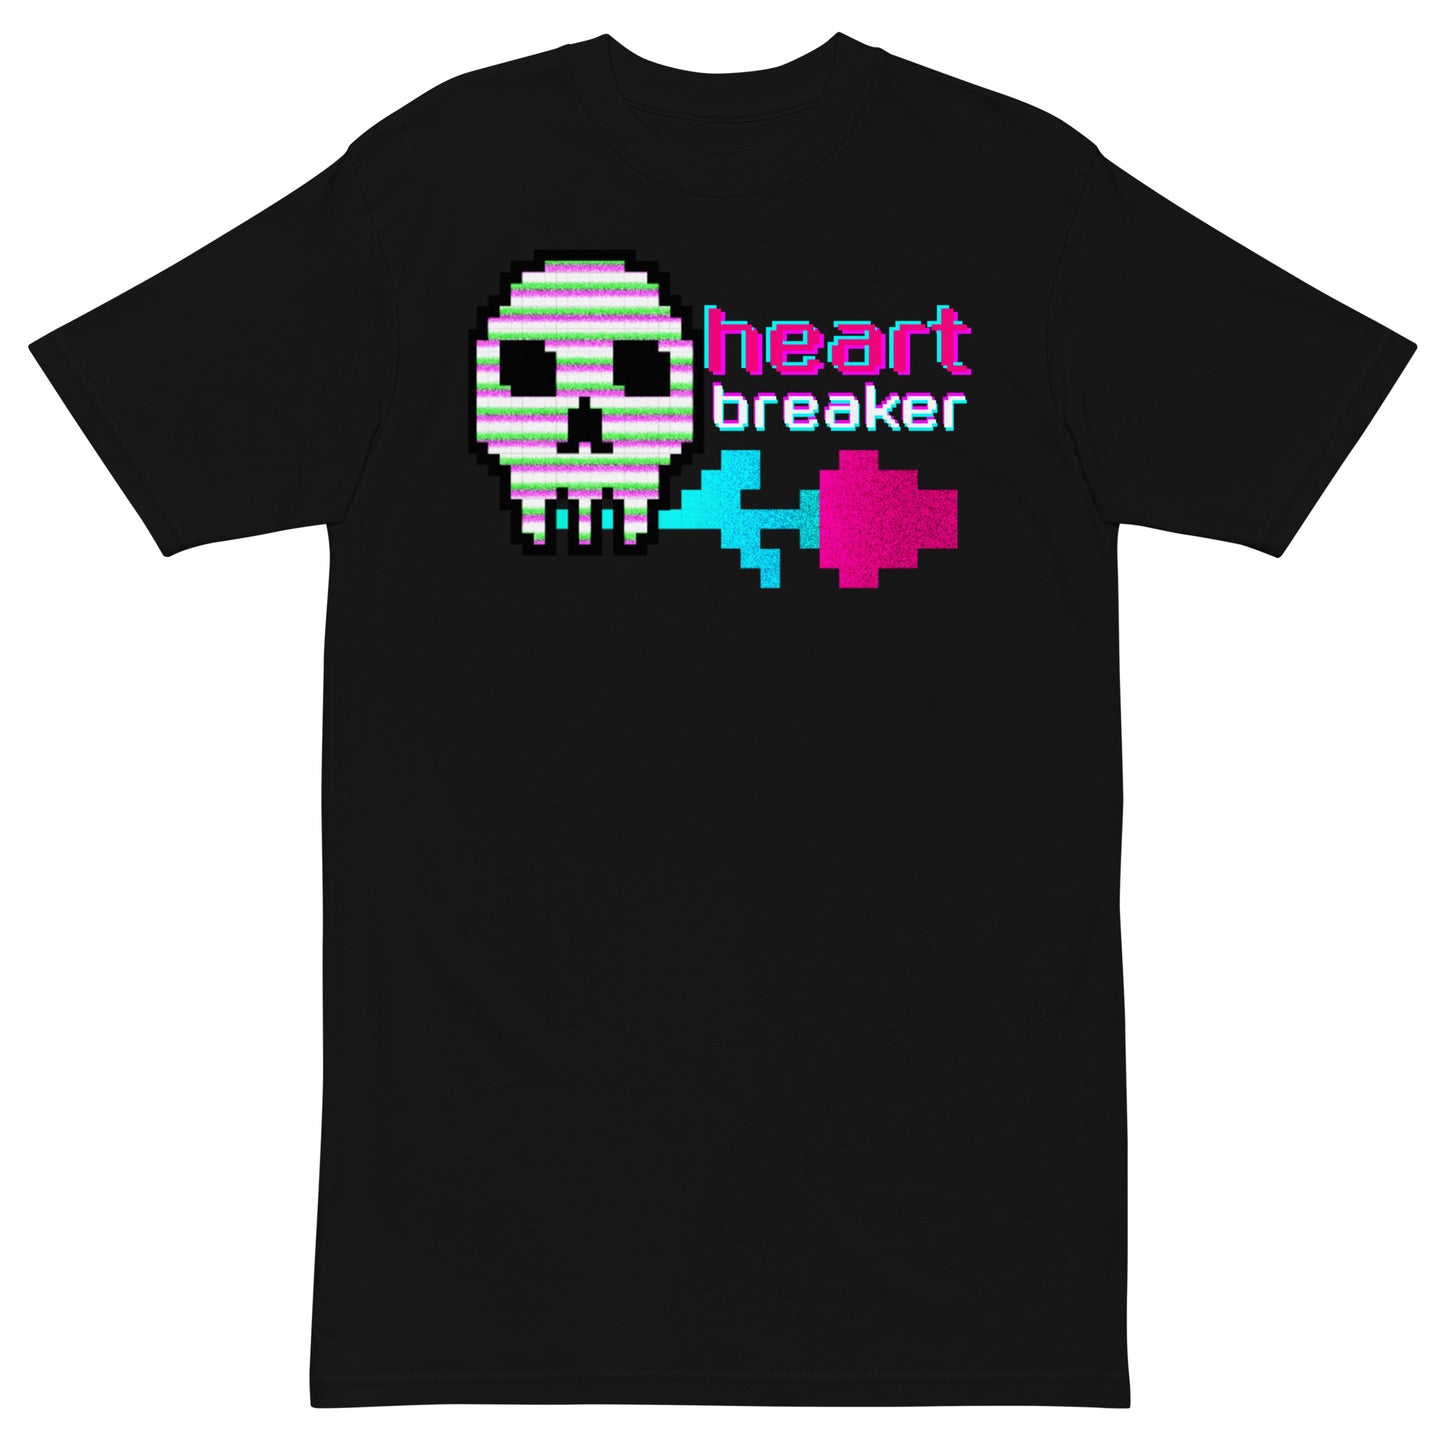 Printed Large Center Unisex Premium Heavyweight Tee / T-shirt "Heartbreaker"